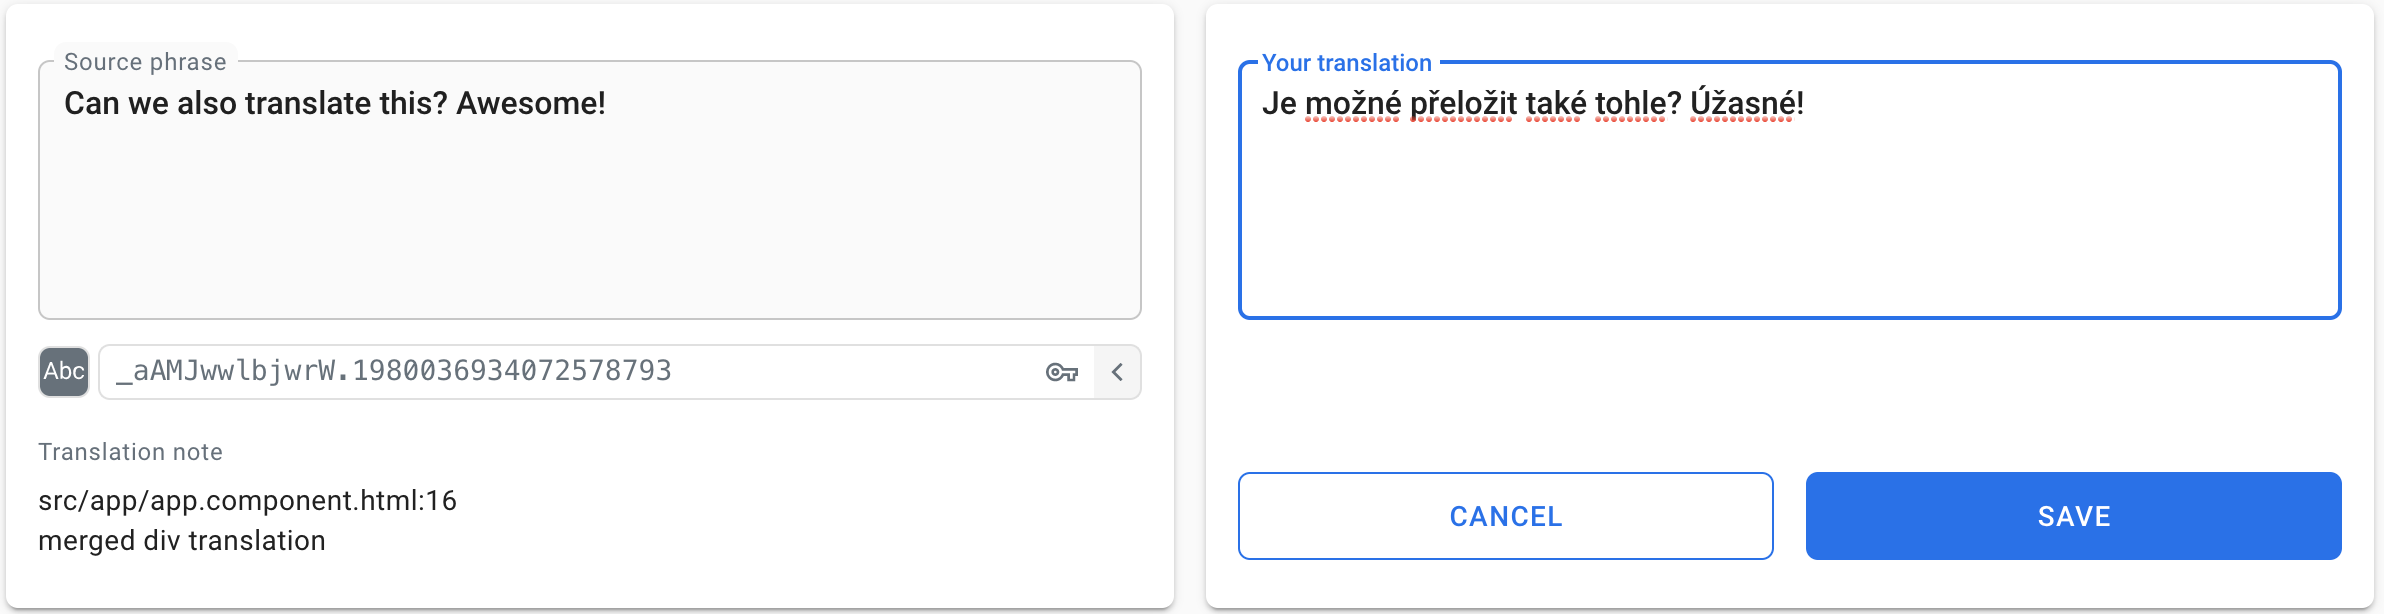 Translate phrase